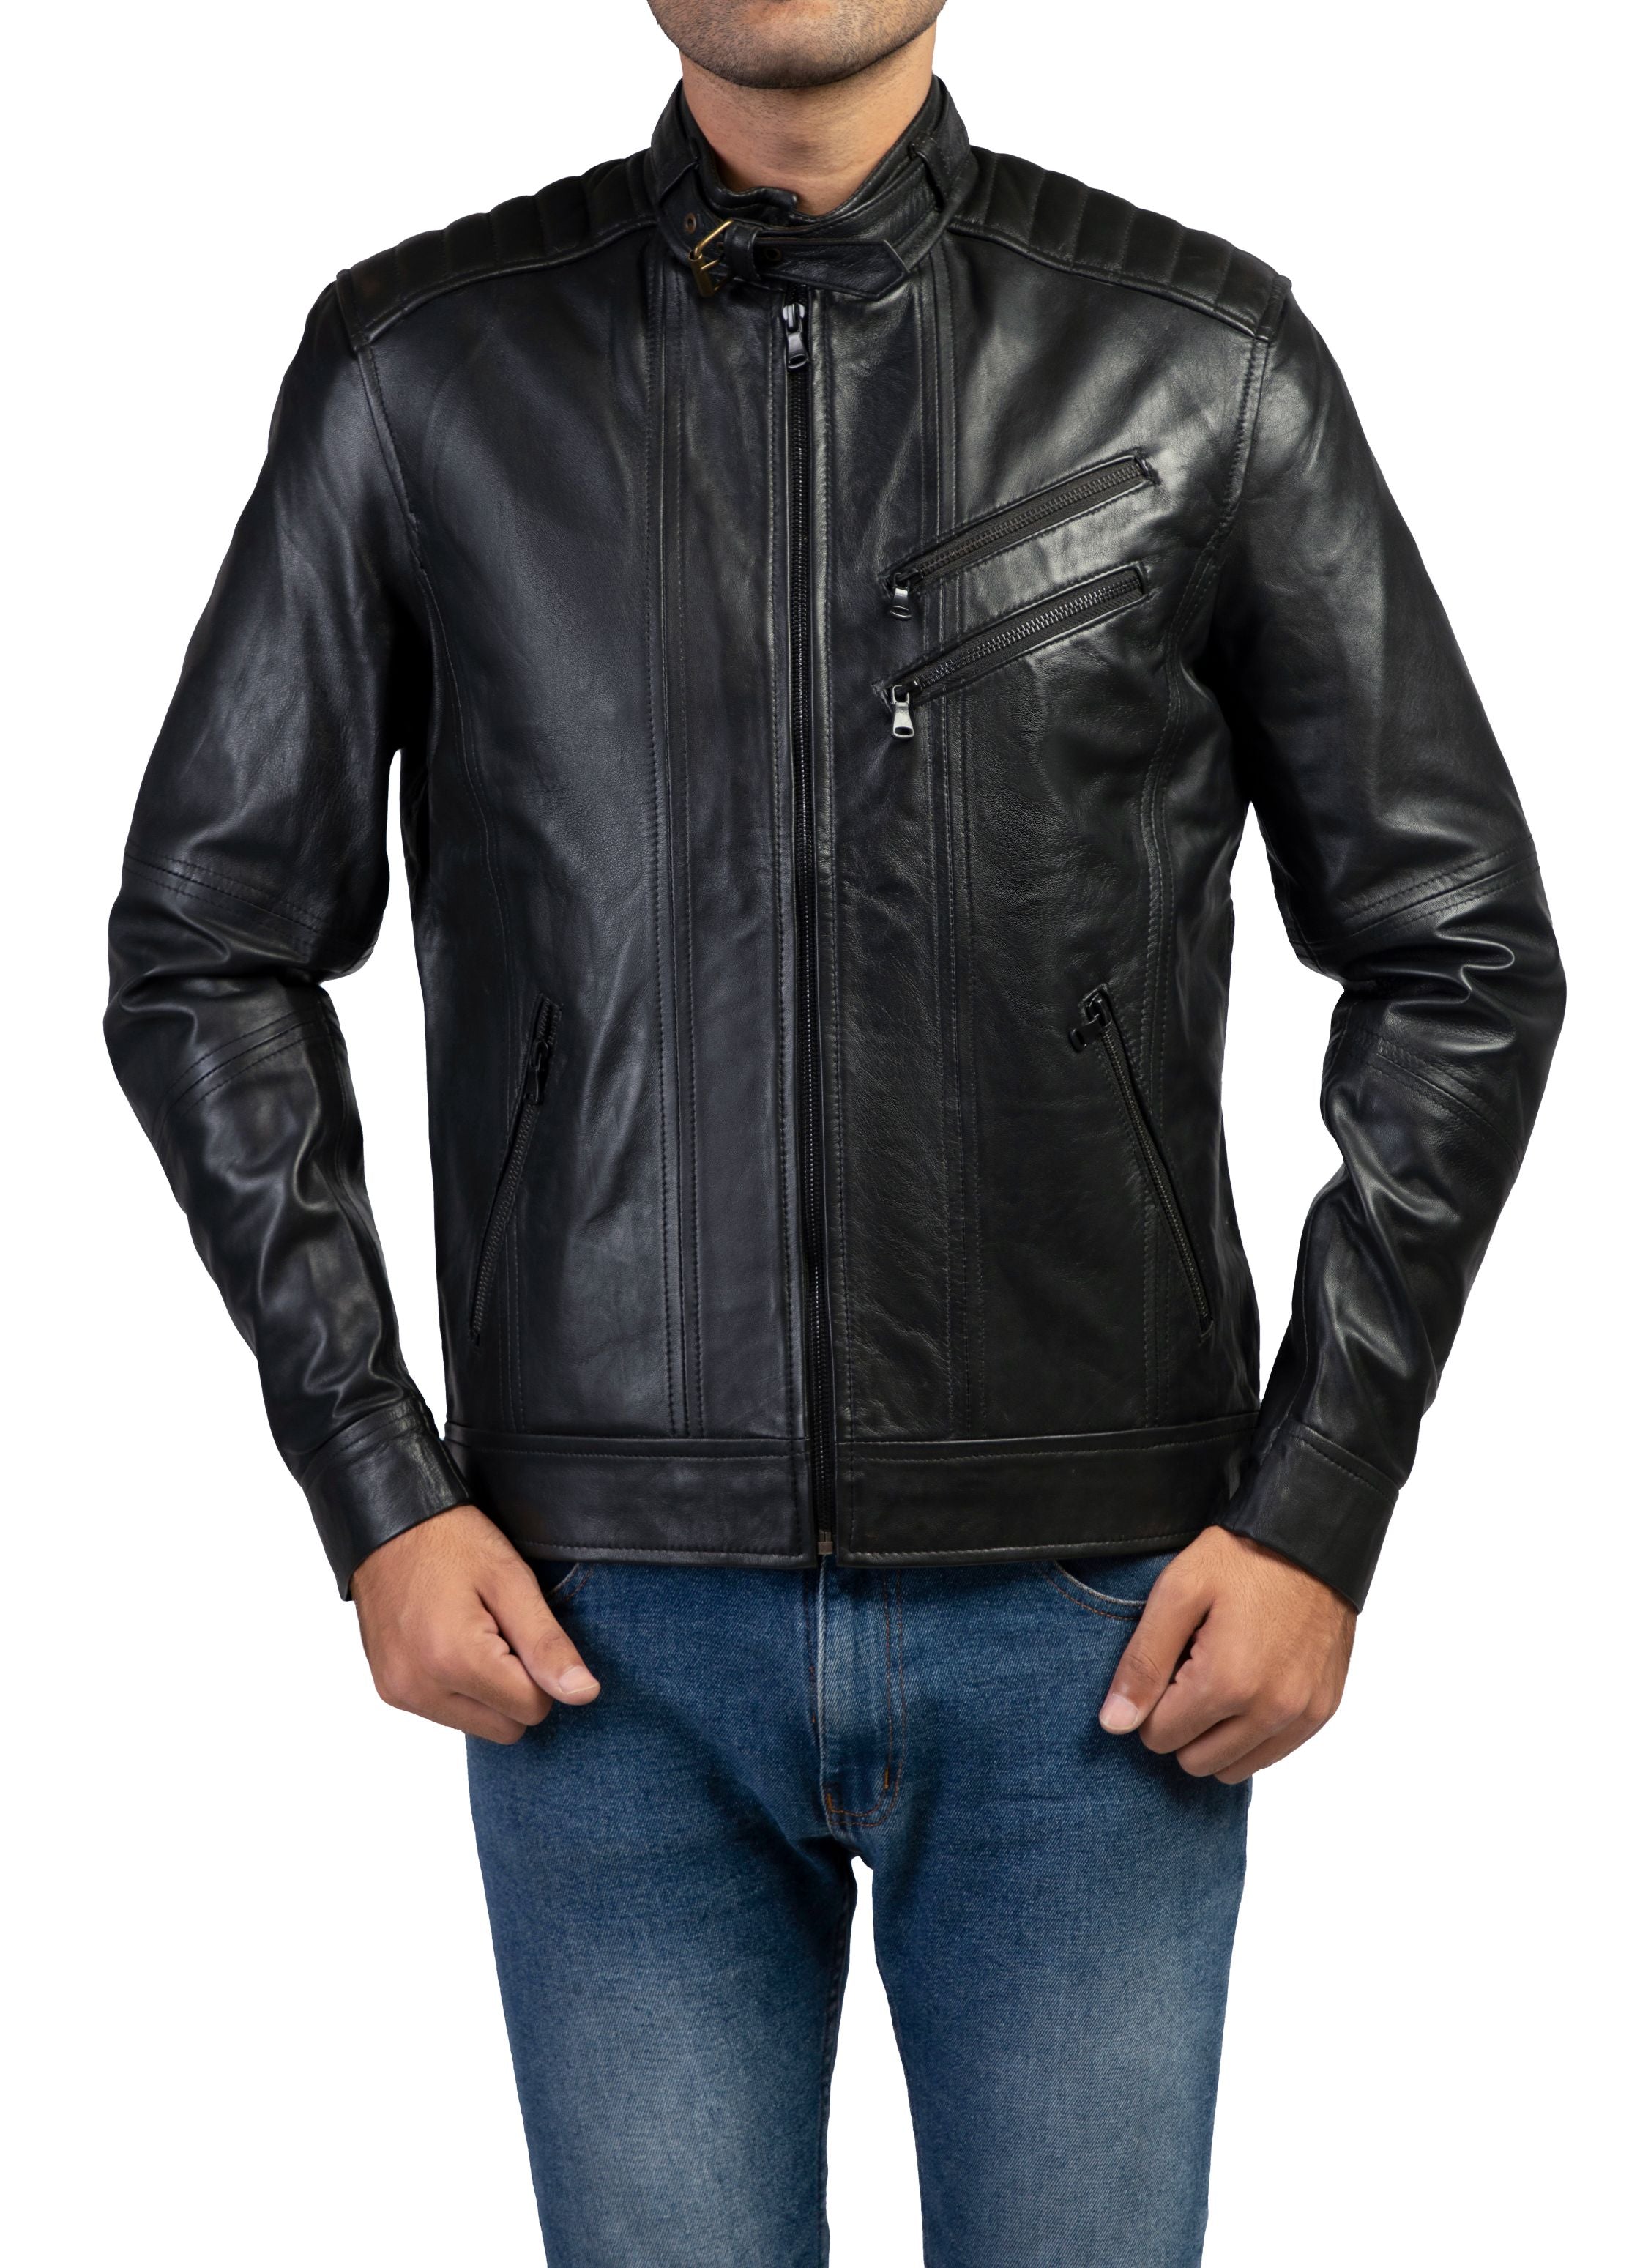 The Bravo Mens Leather Jacket-Black